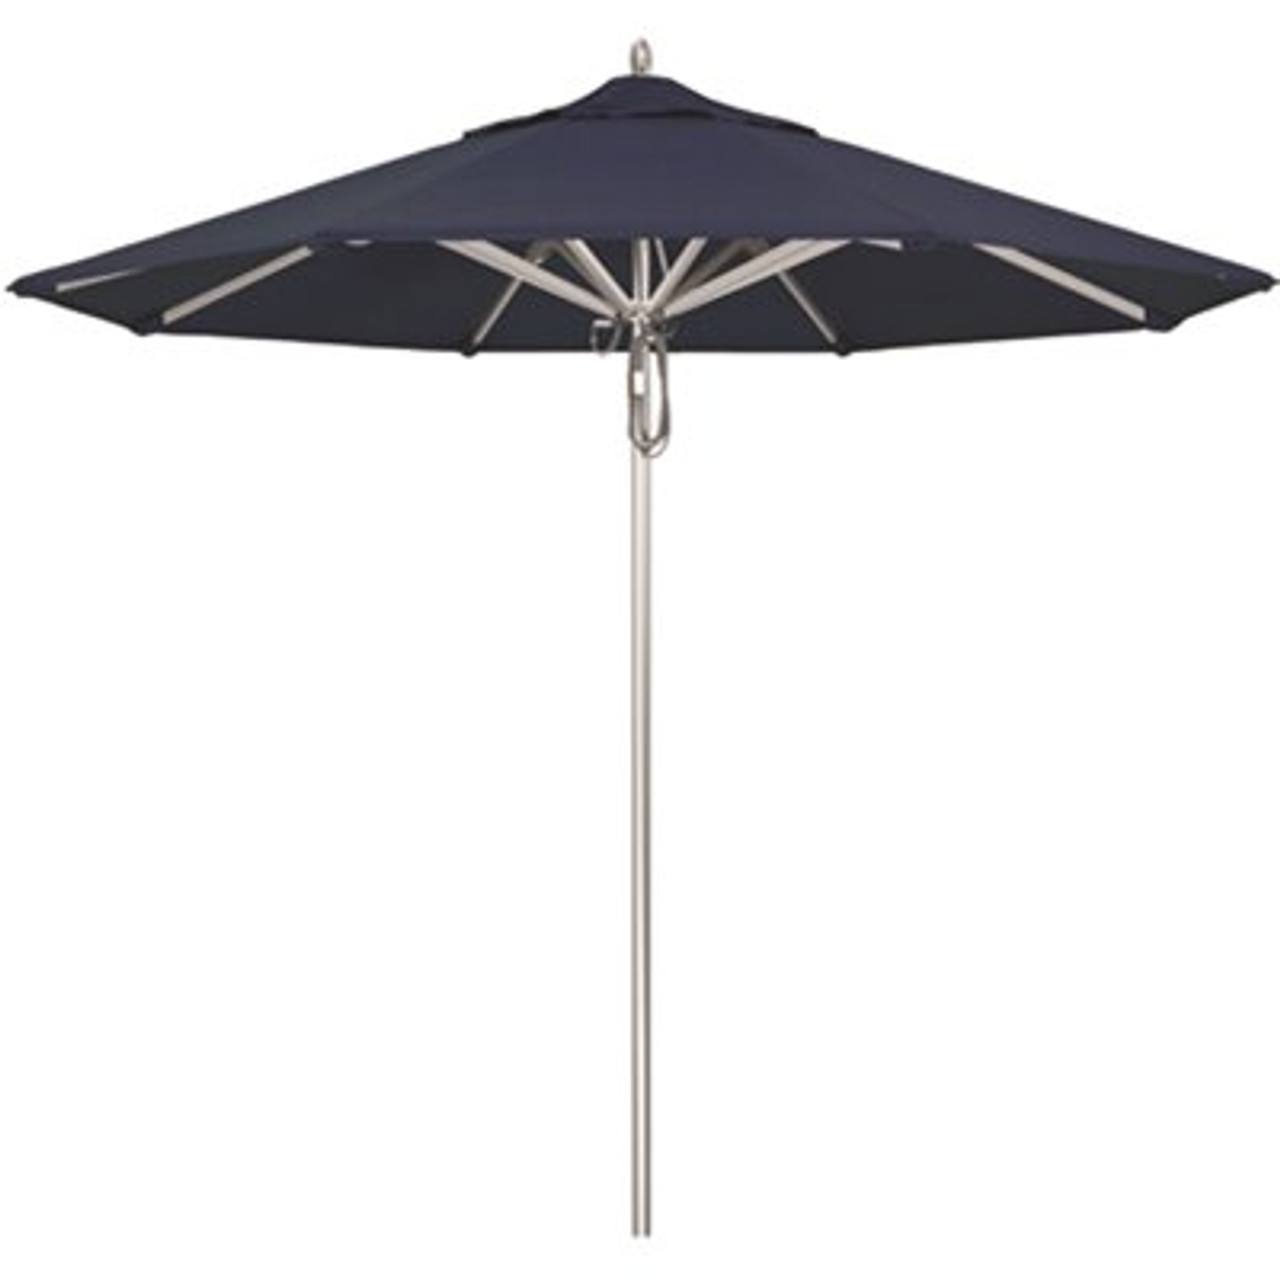 California Umbrella 9 ft. Silver Aluminum Commercial Market Patio Umbrella with Pulley Lift in Spectrum Indigo Sunbrella